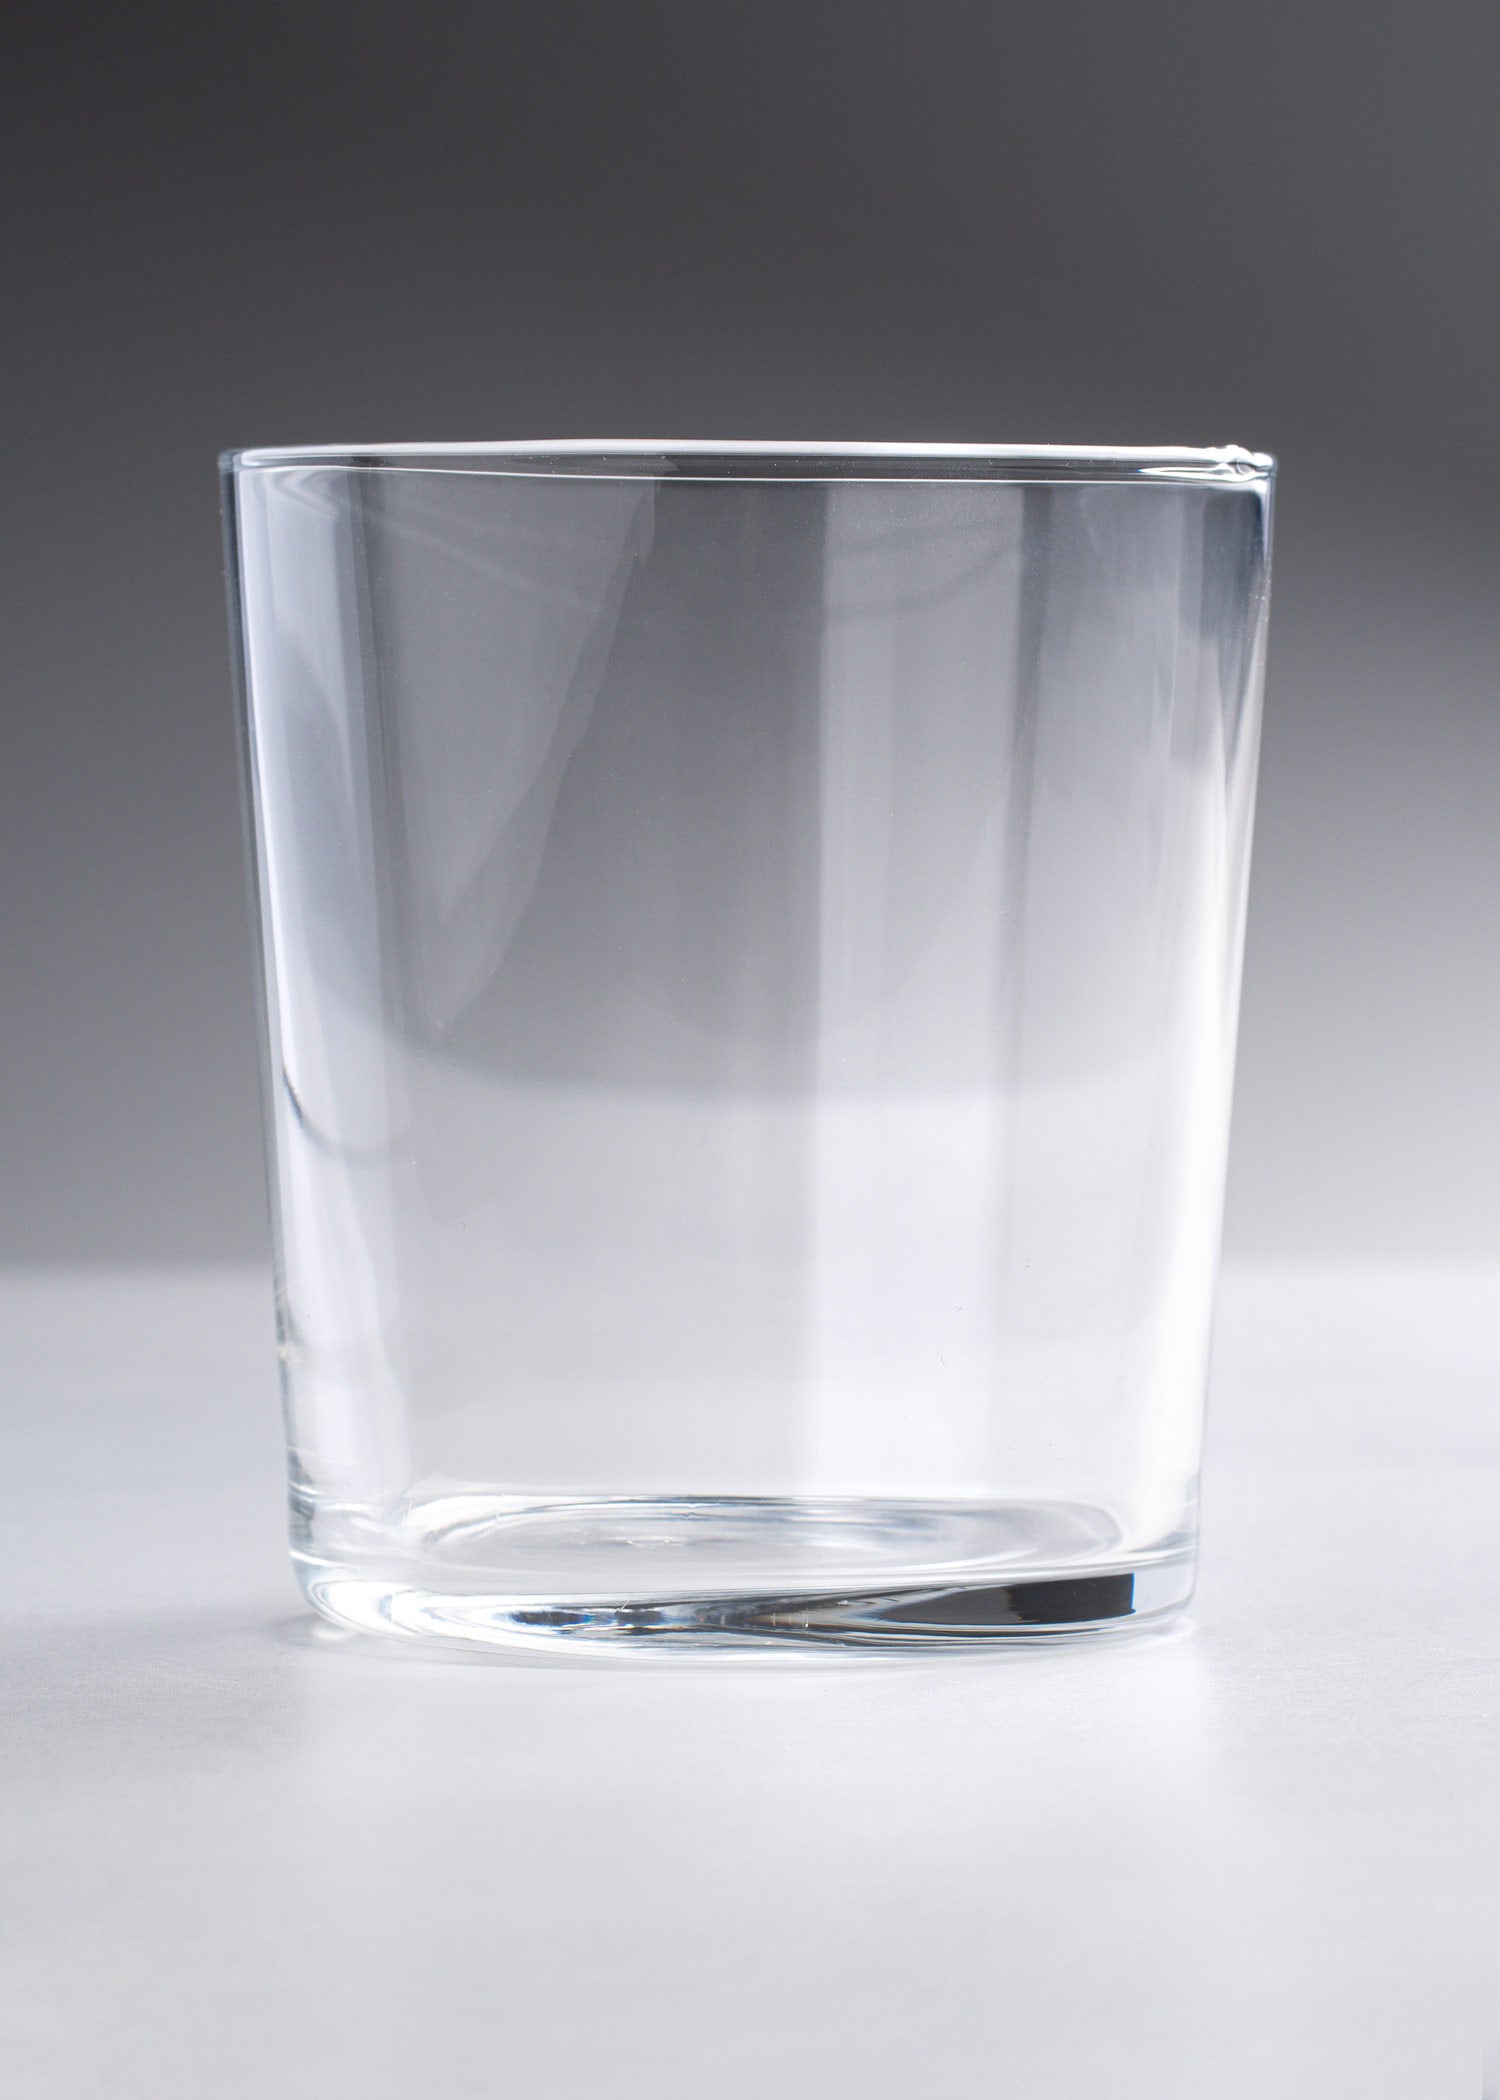 precio vaso vidrio templado maha